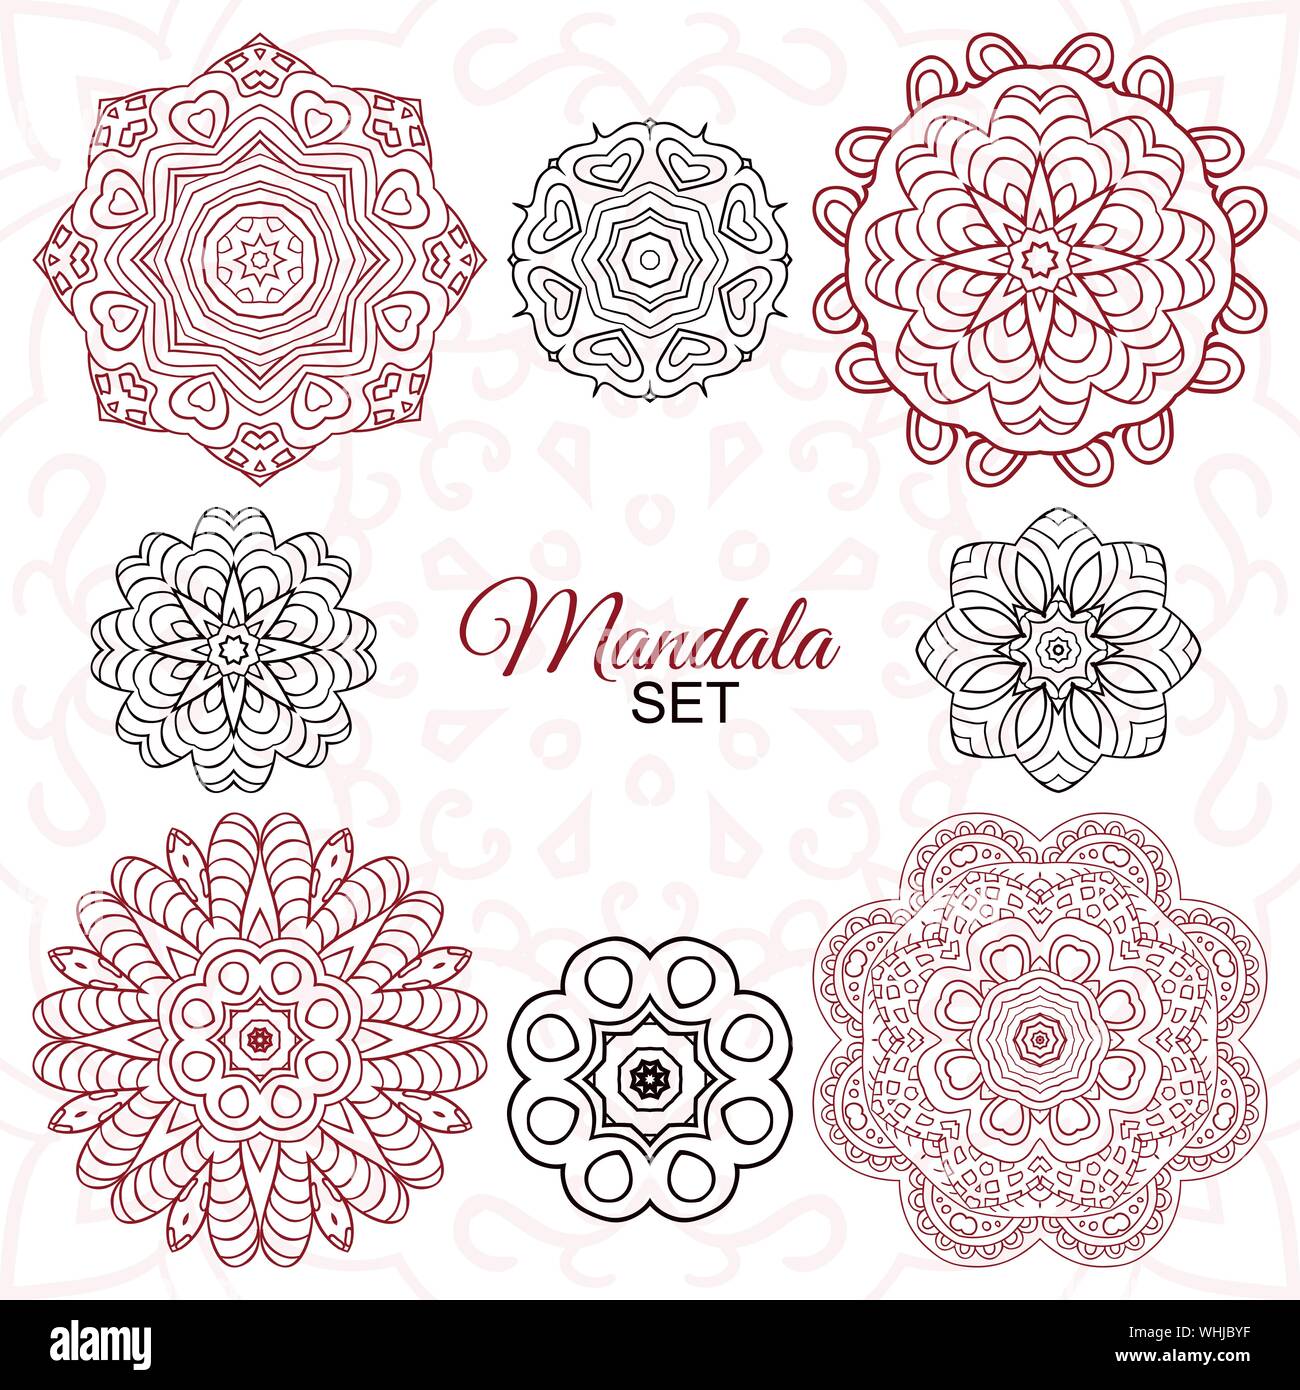 Mandala set. Round decorative ornaments for creativity. Doodle drawing, ethnic motifs. 8 zentagl images Stock Vector